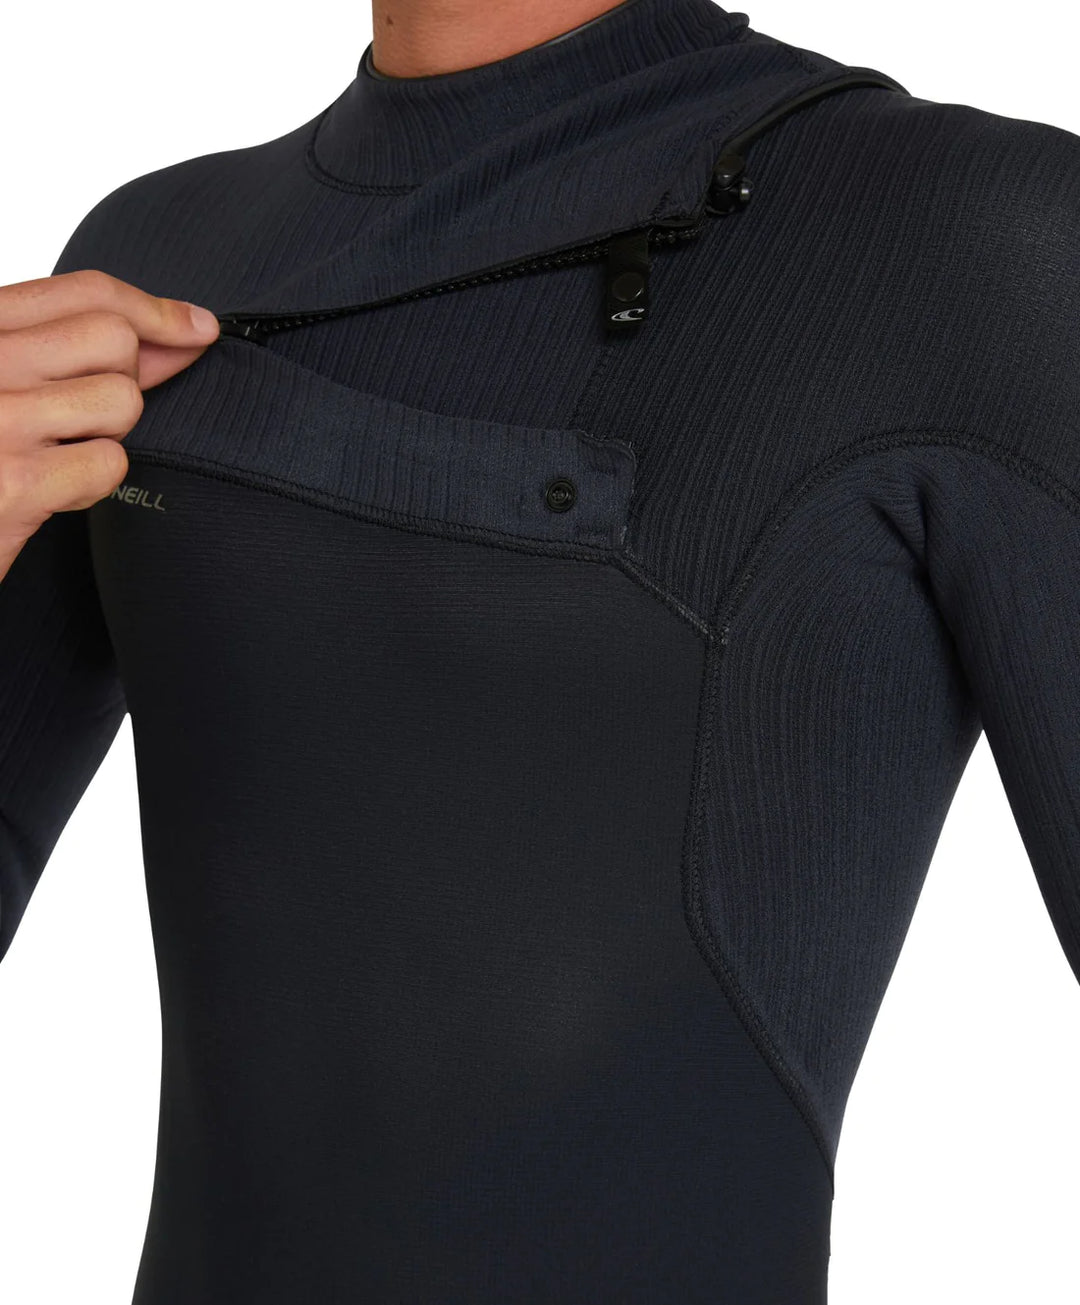 Hyperfreak 4/3+ Chest-Zip Steamer Wetsuit - Black